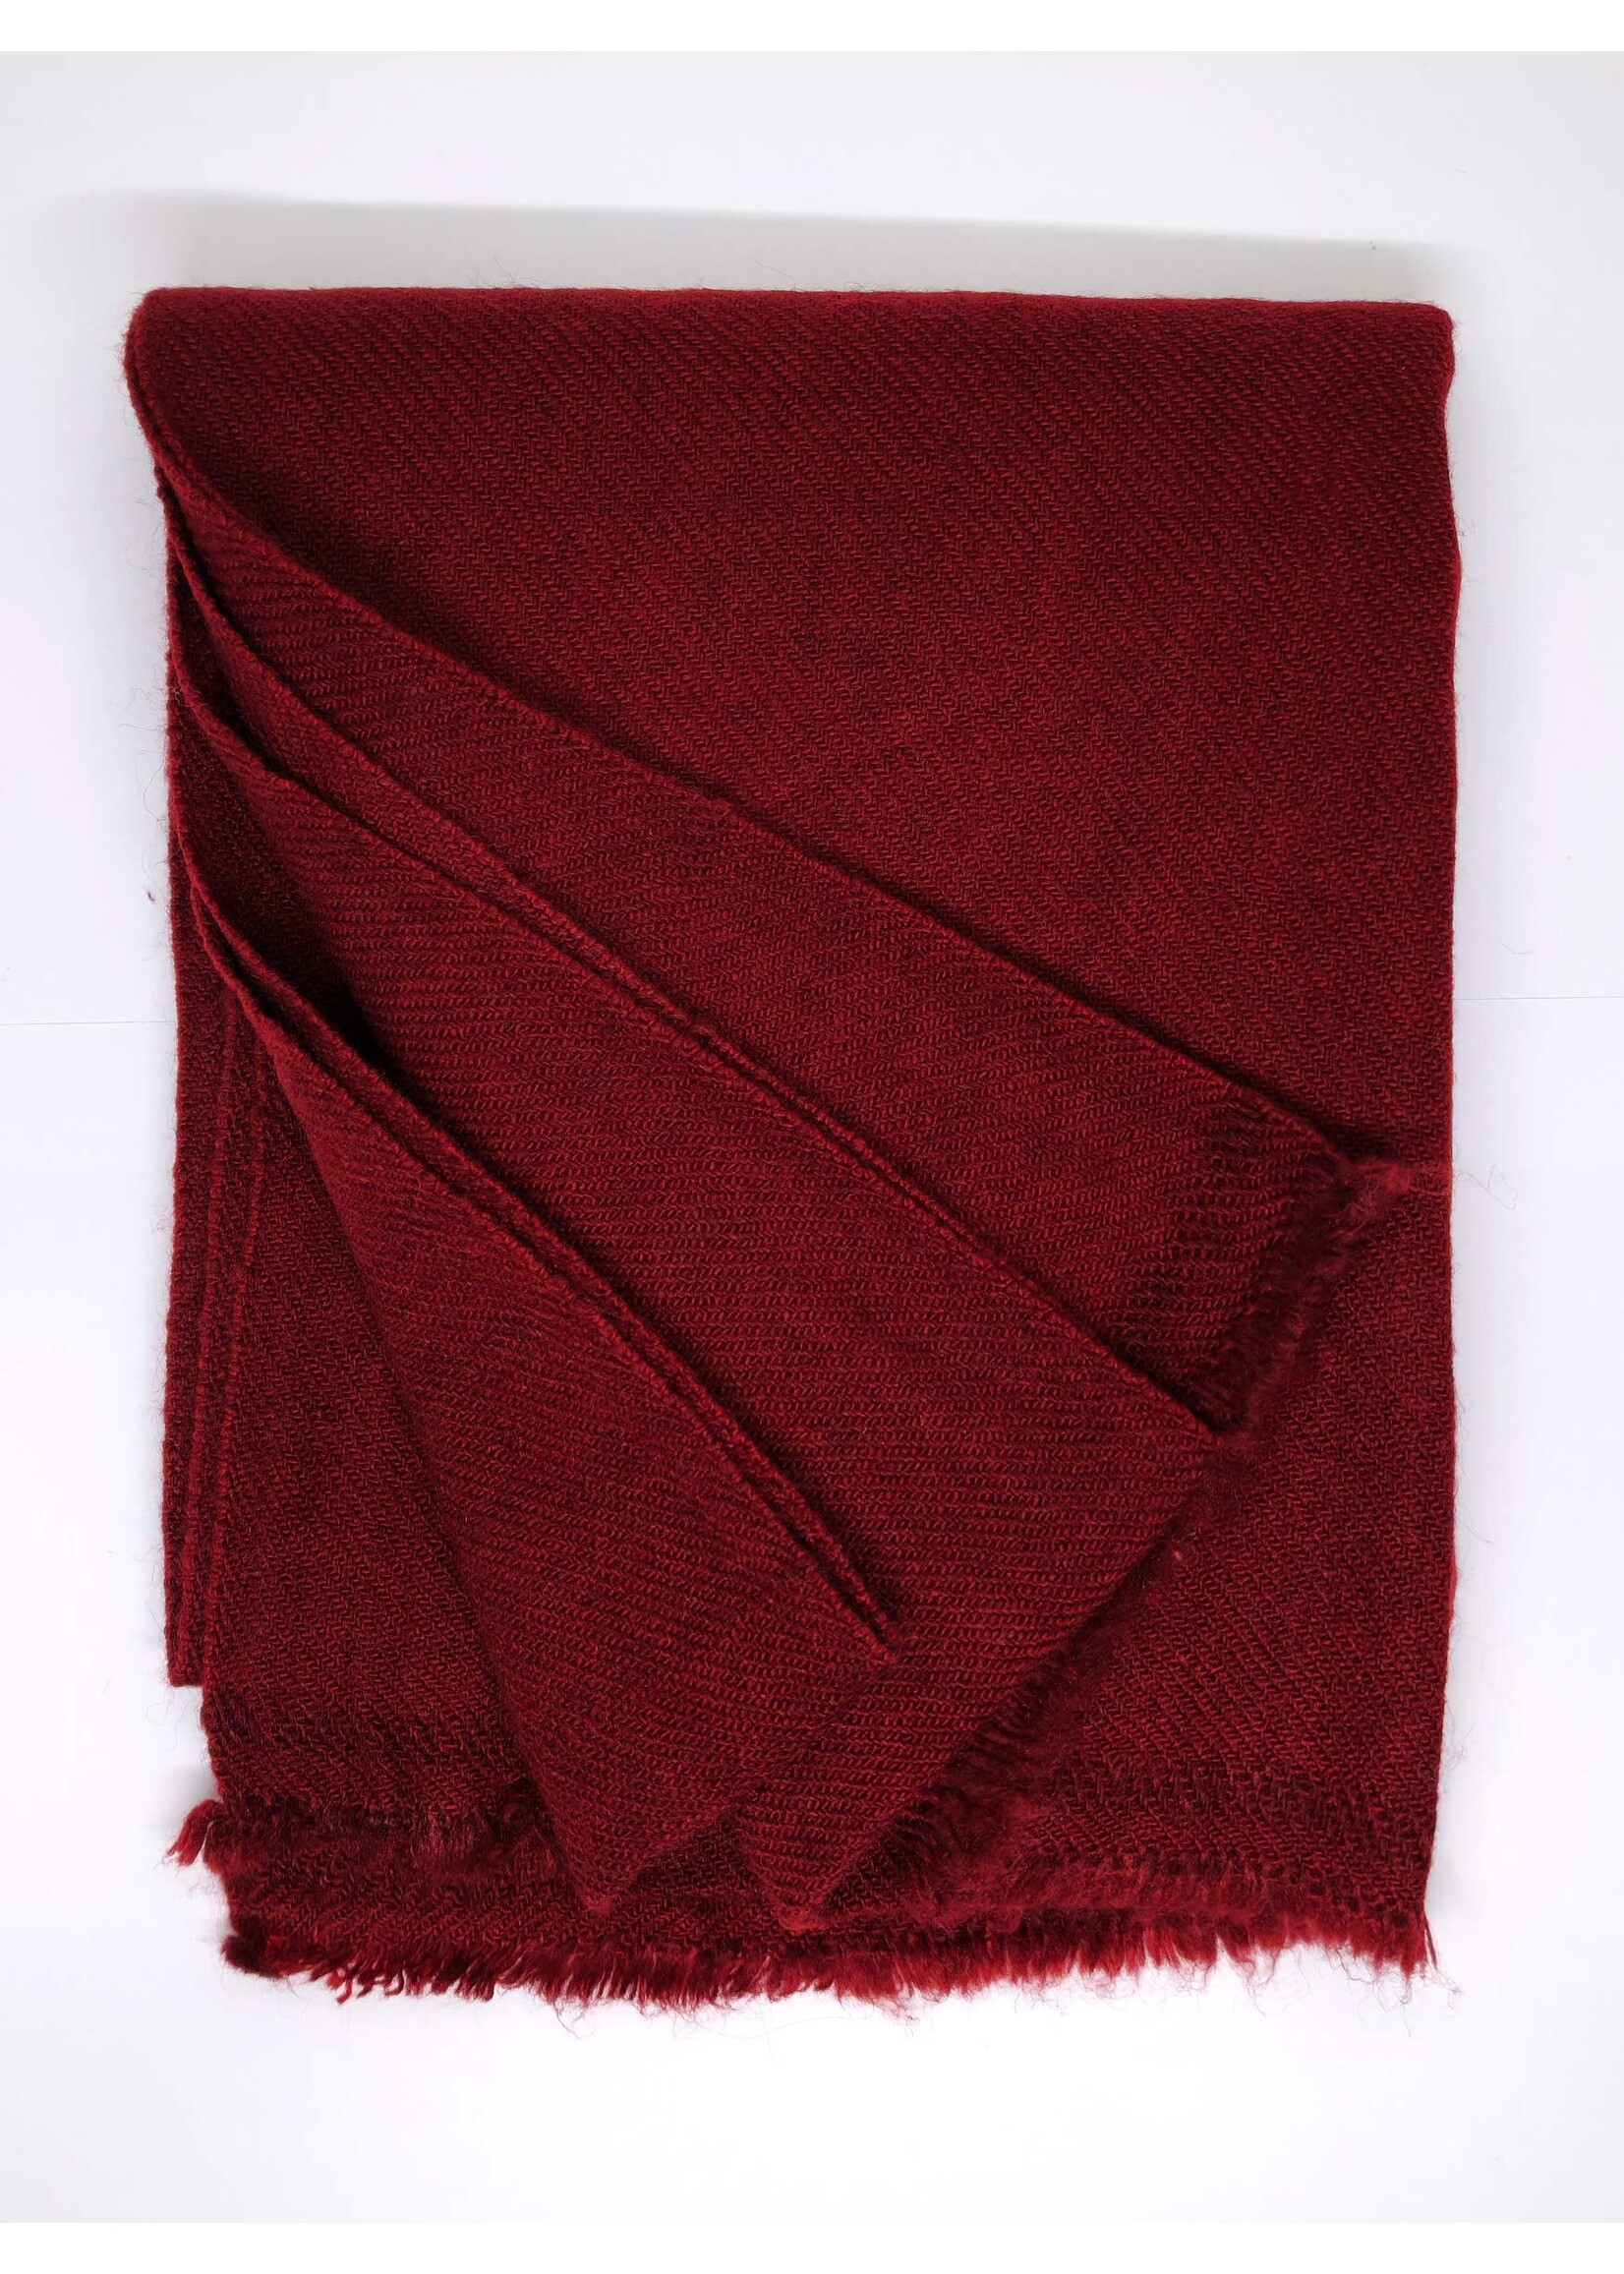 Sciarpa in pashmina rosso borgogna, 35 x 160 cm